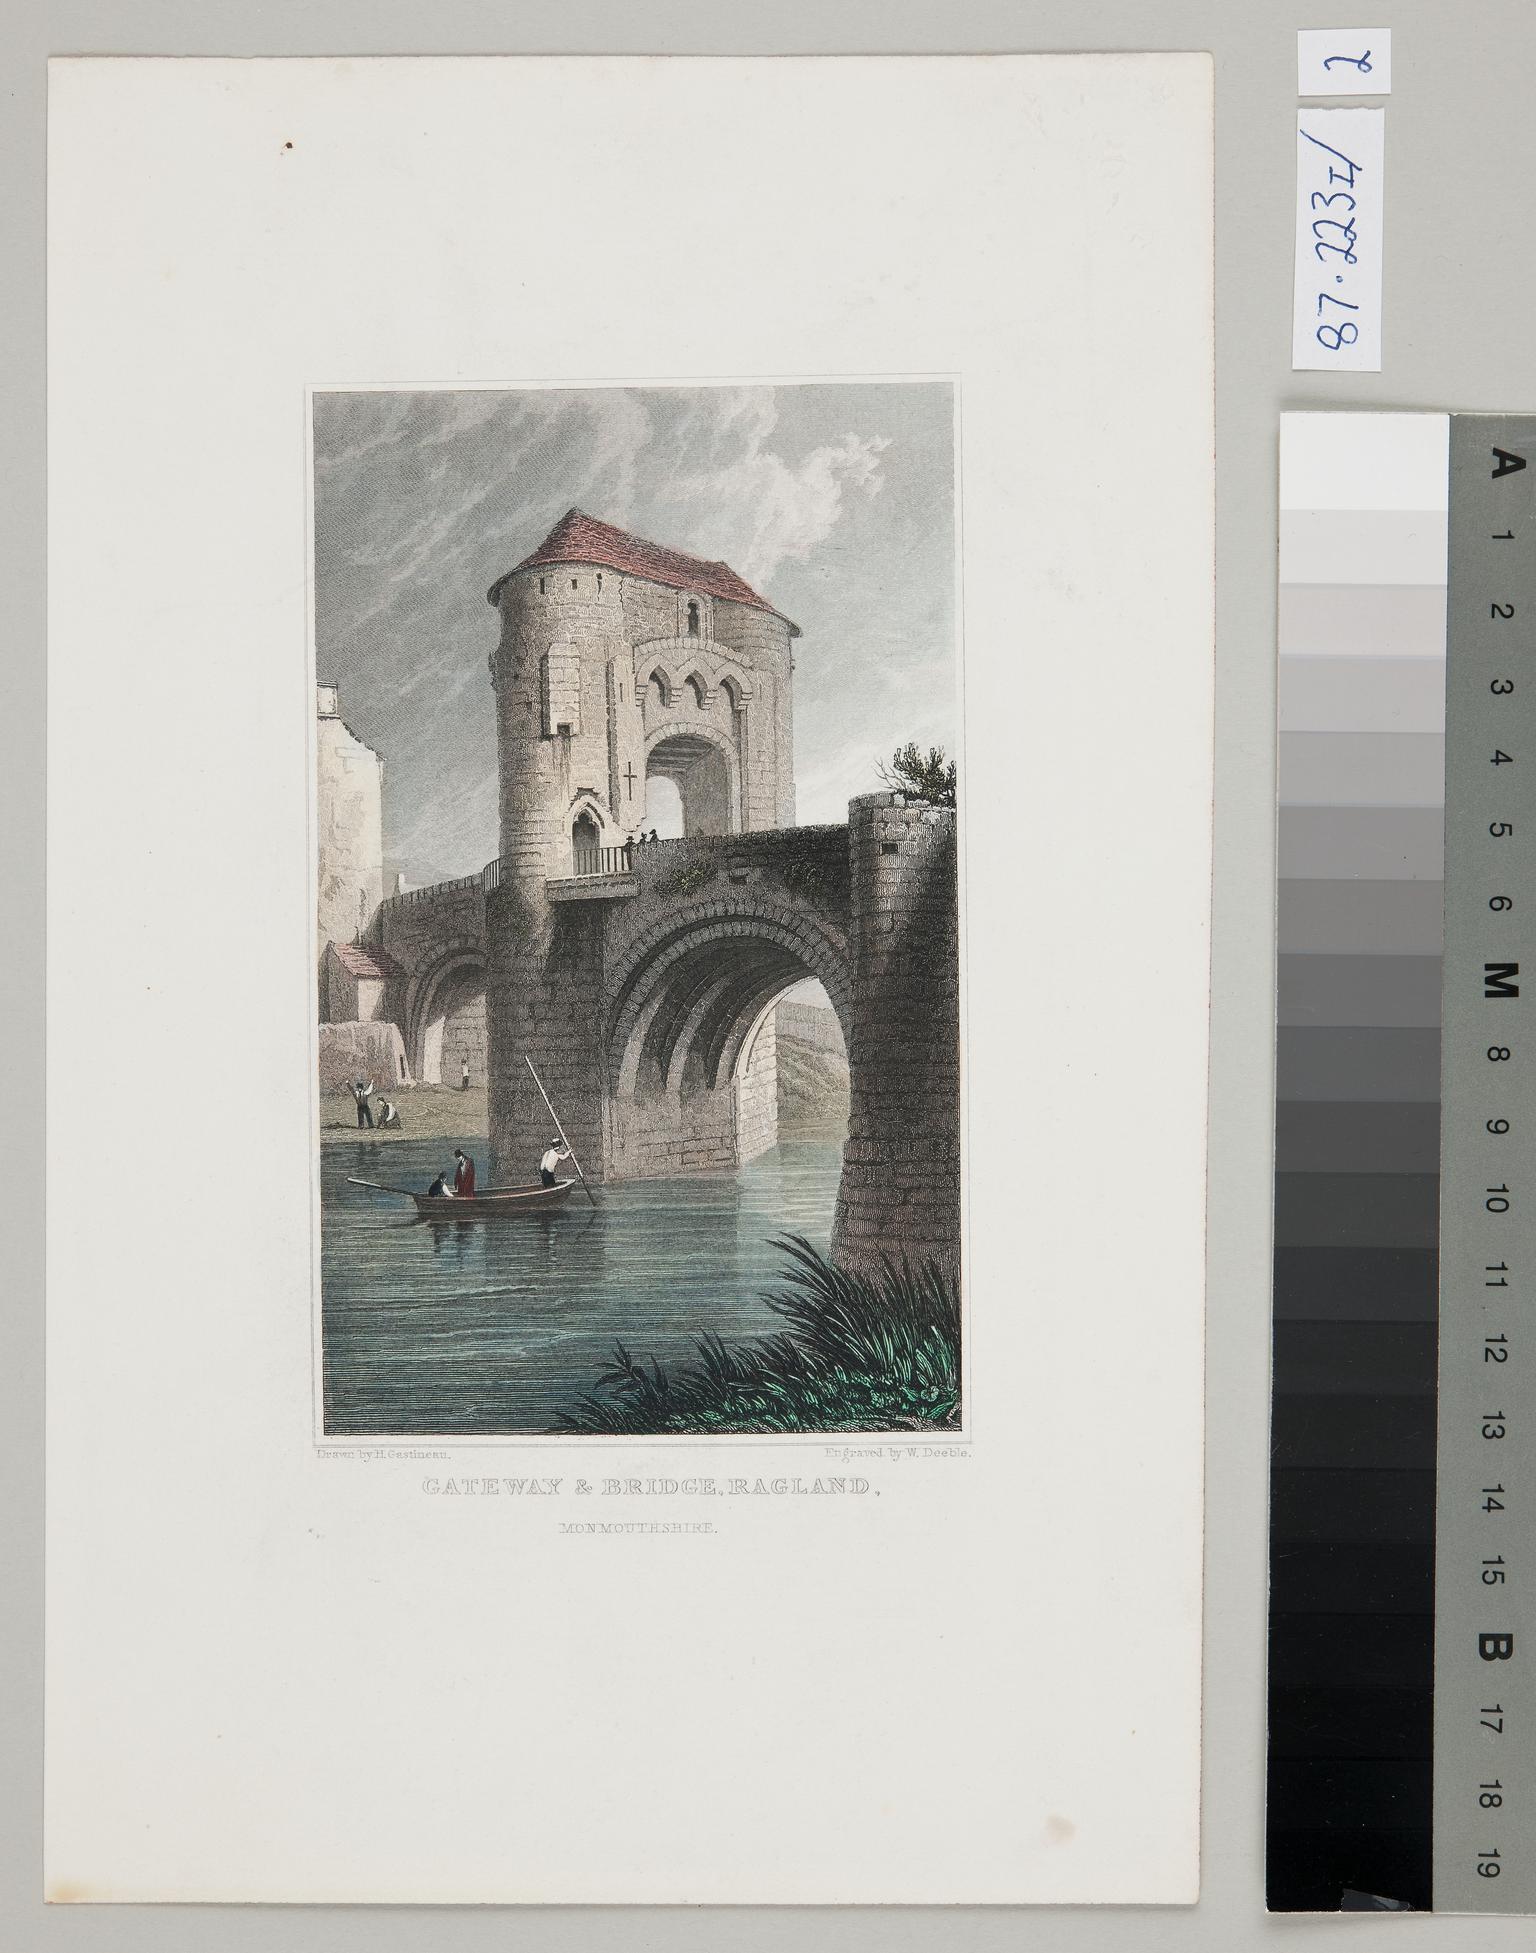 Gateway and Bridge, Ragland (print)